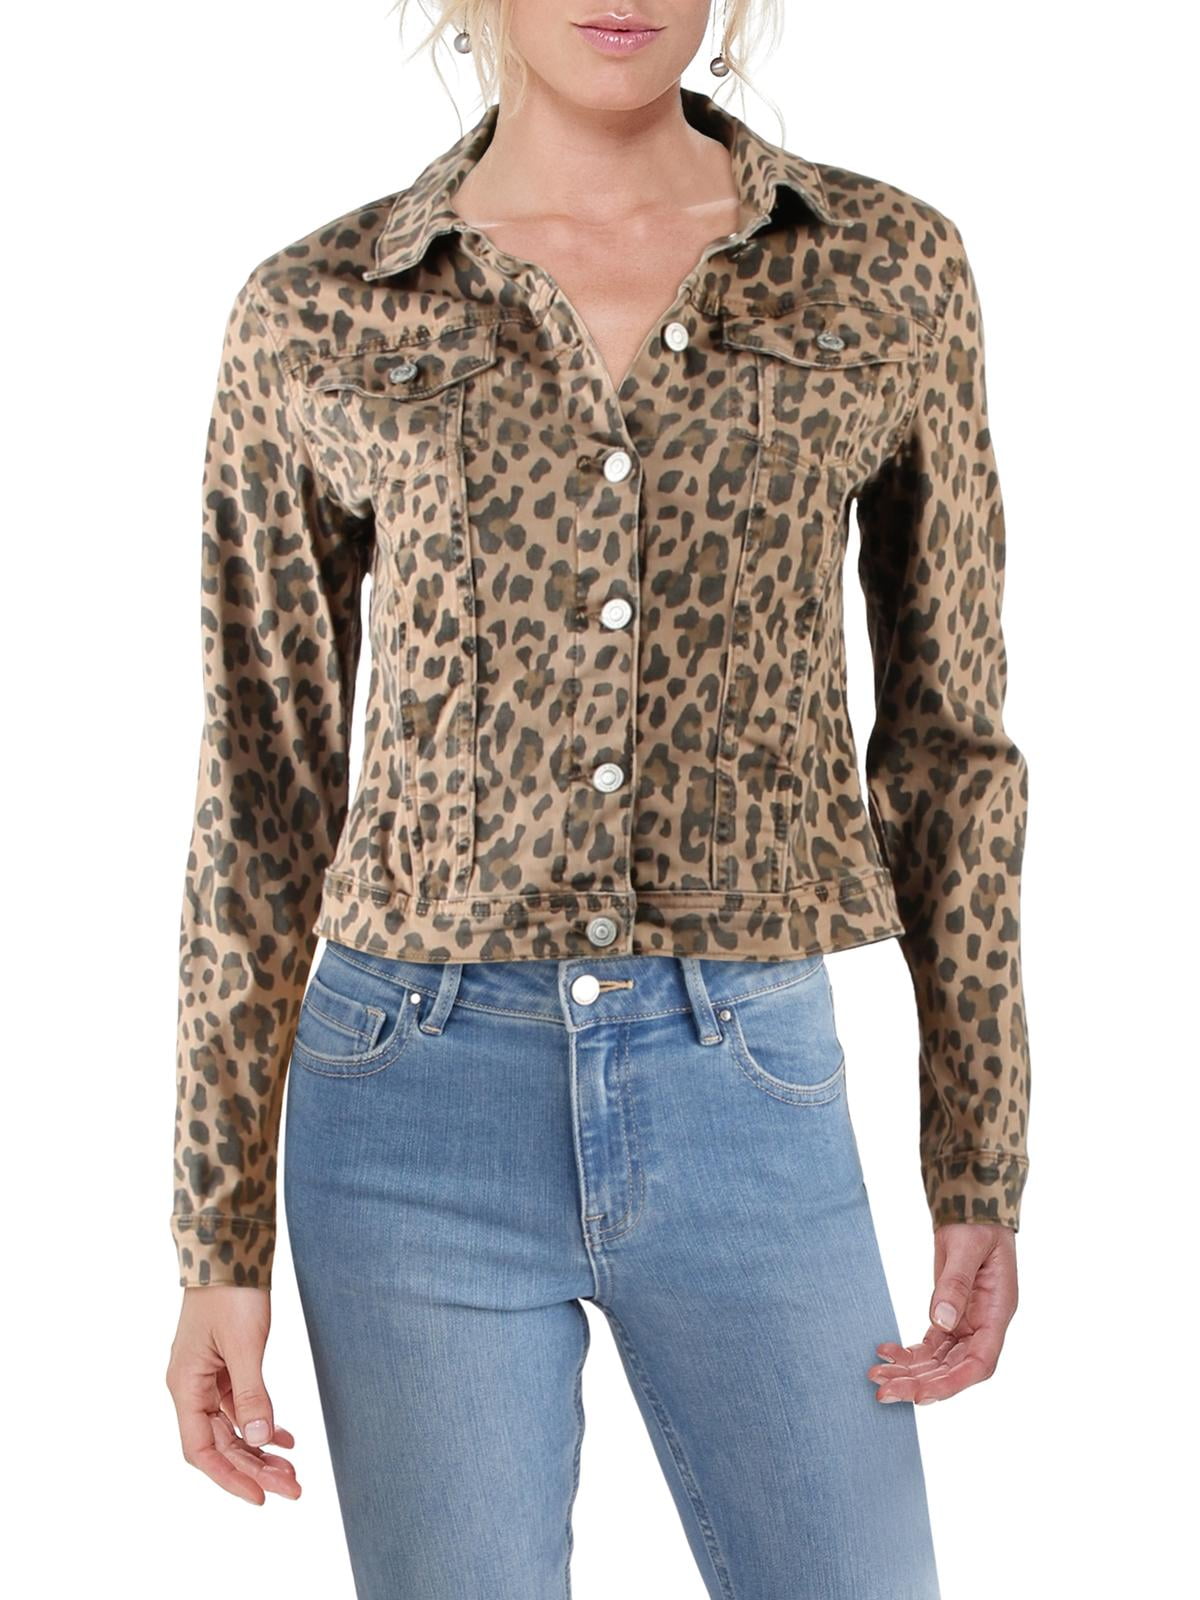 walmart leopard denim jacket